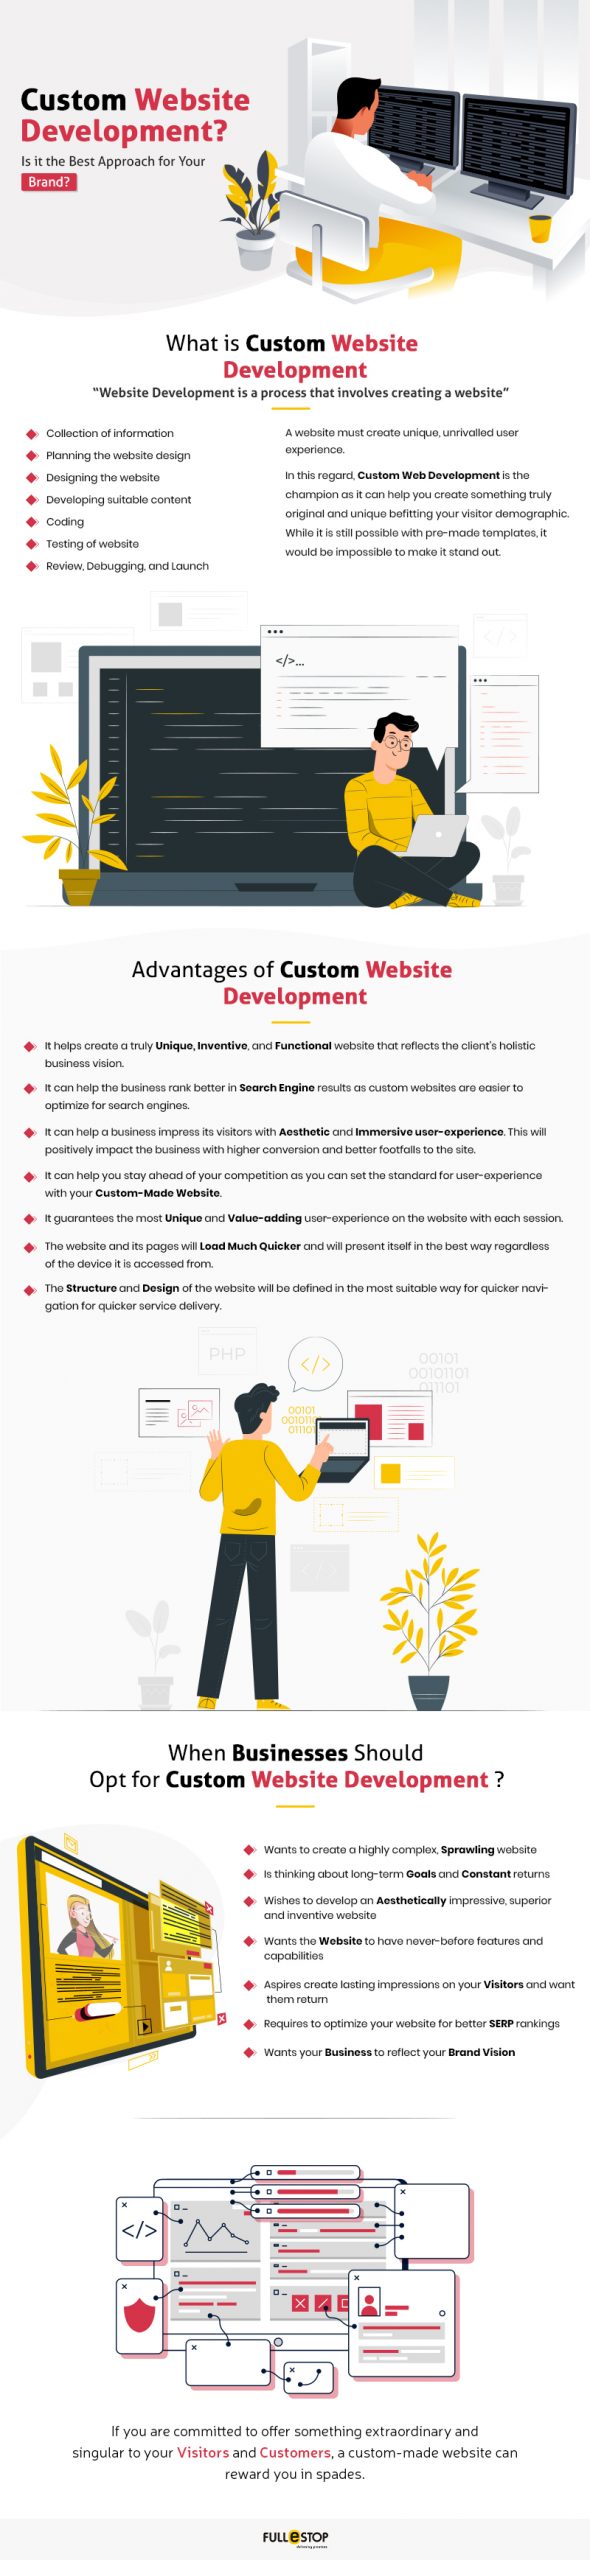 custom website development infographic